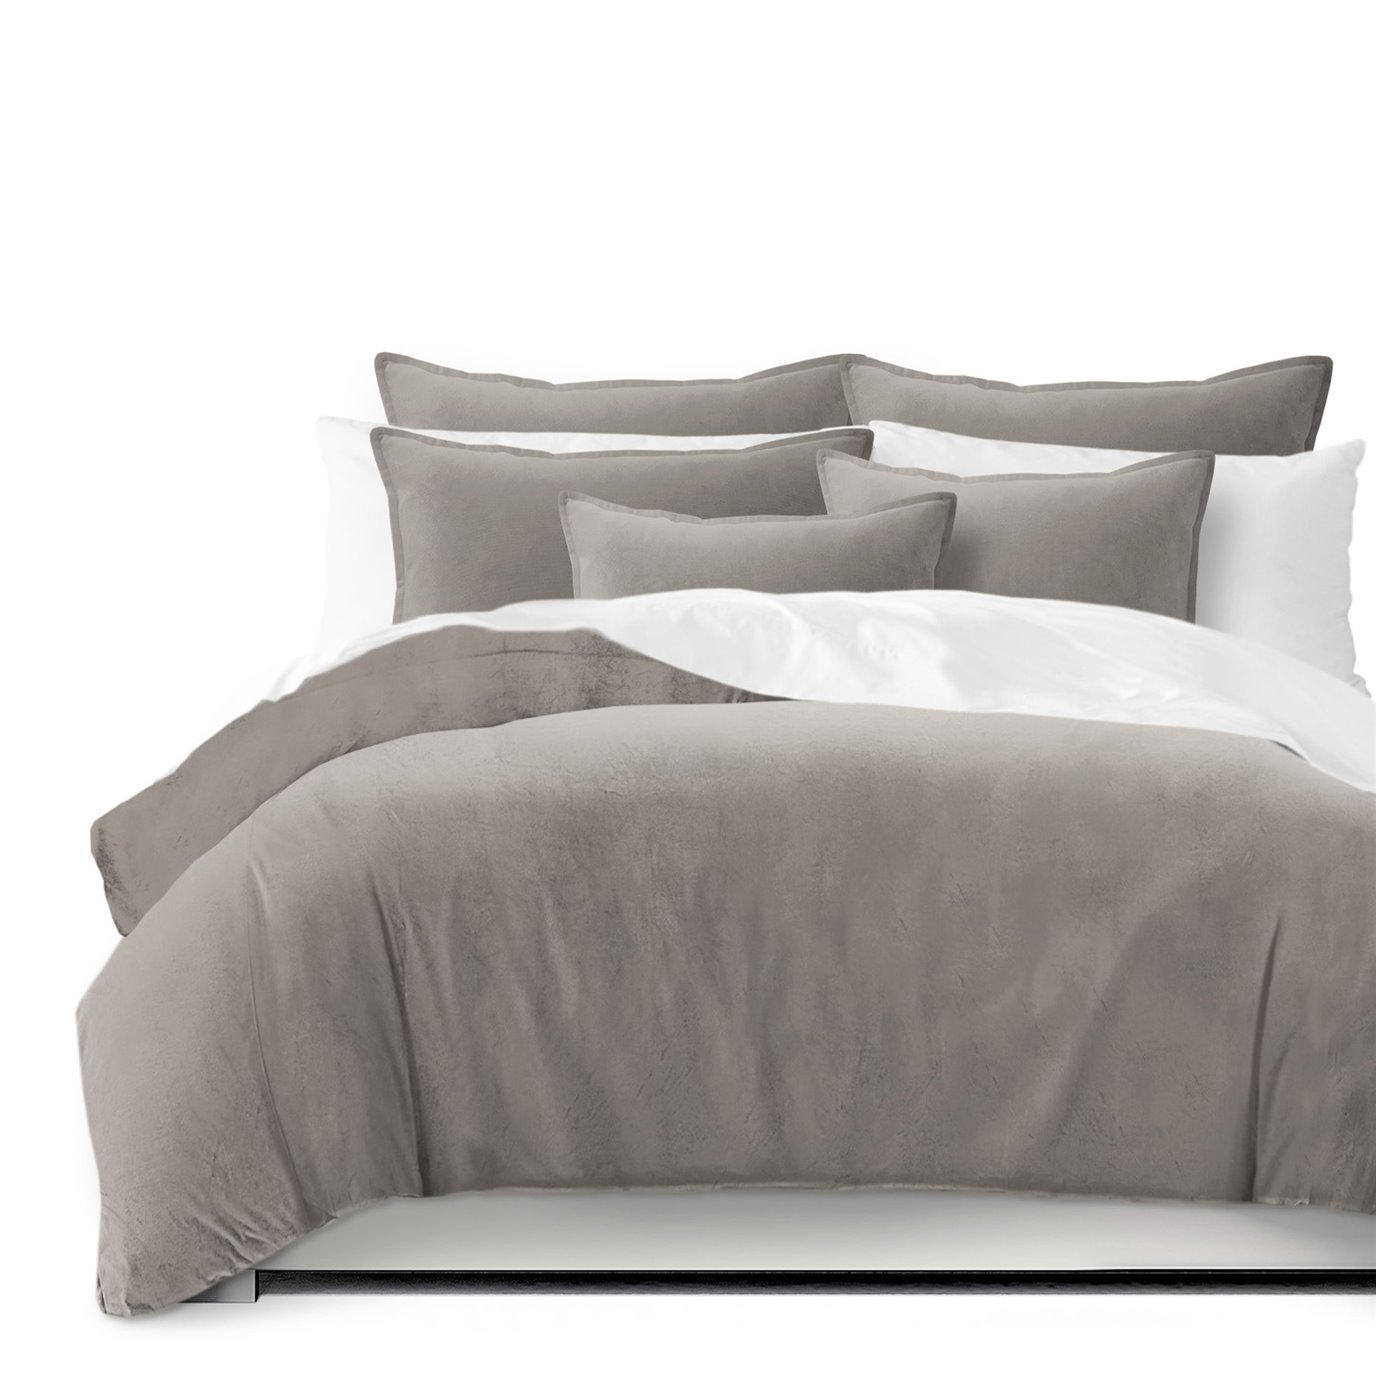 Vanessa Greige Comforter and Pillow Sham(s) Set - Size Super King